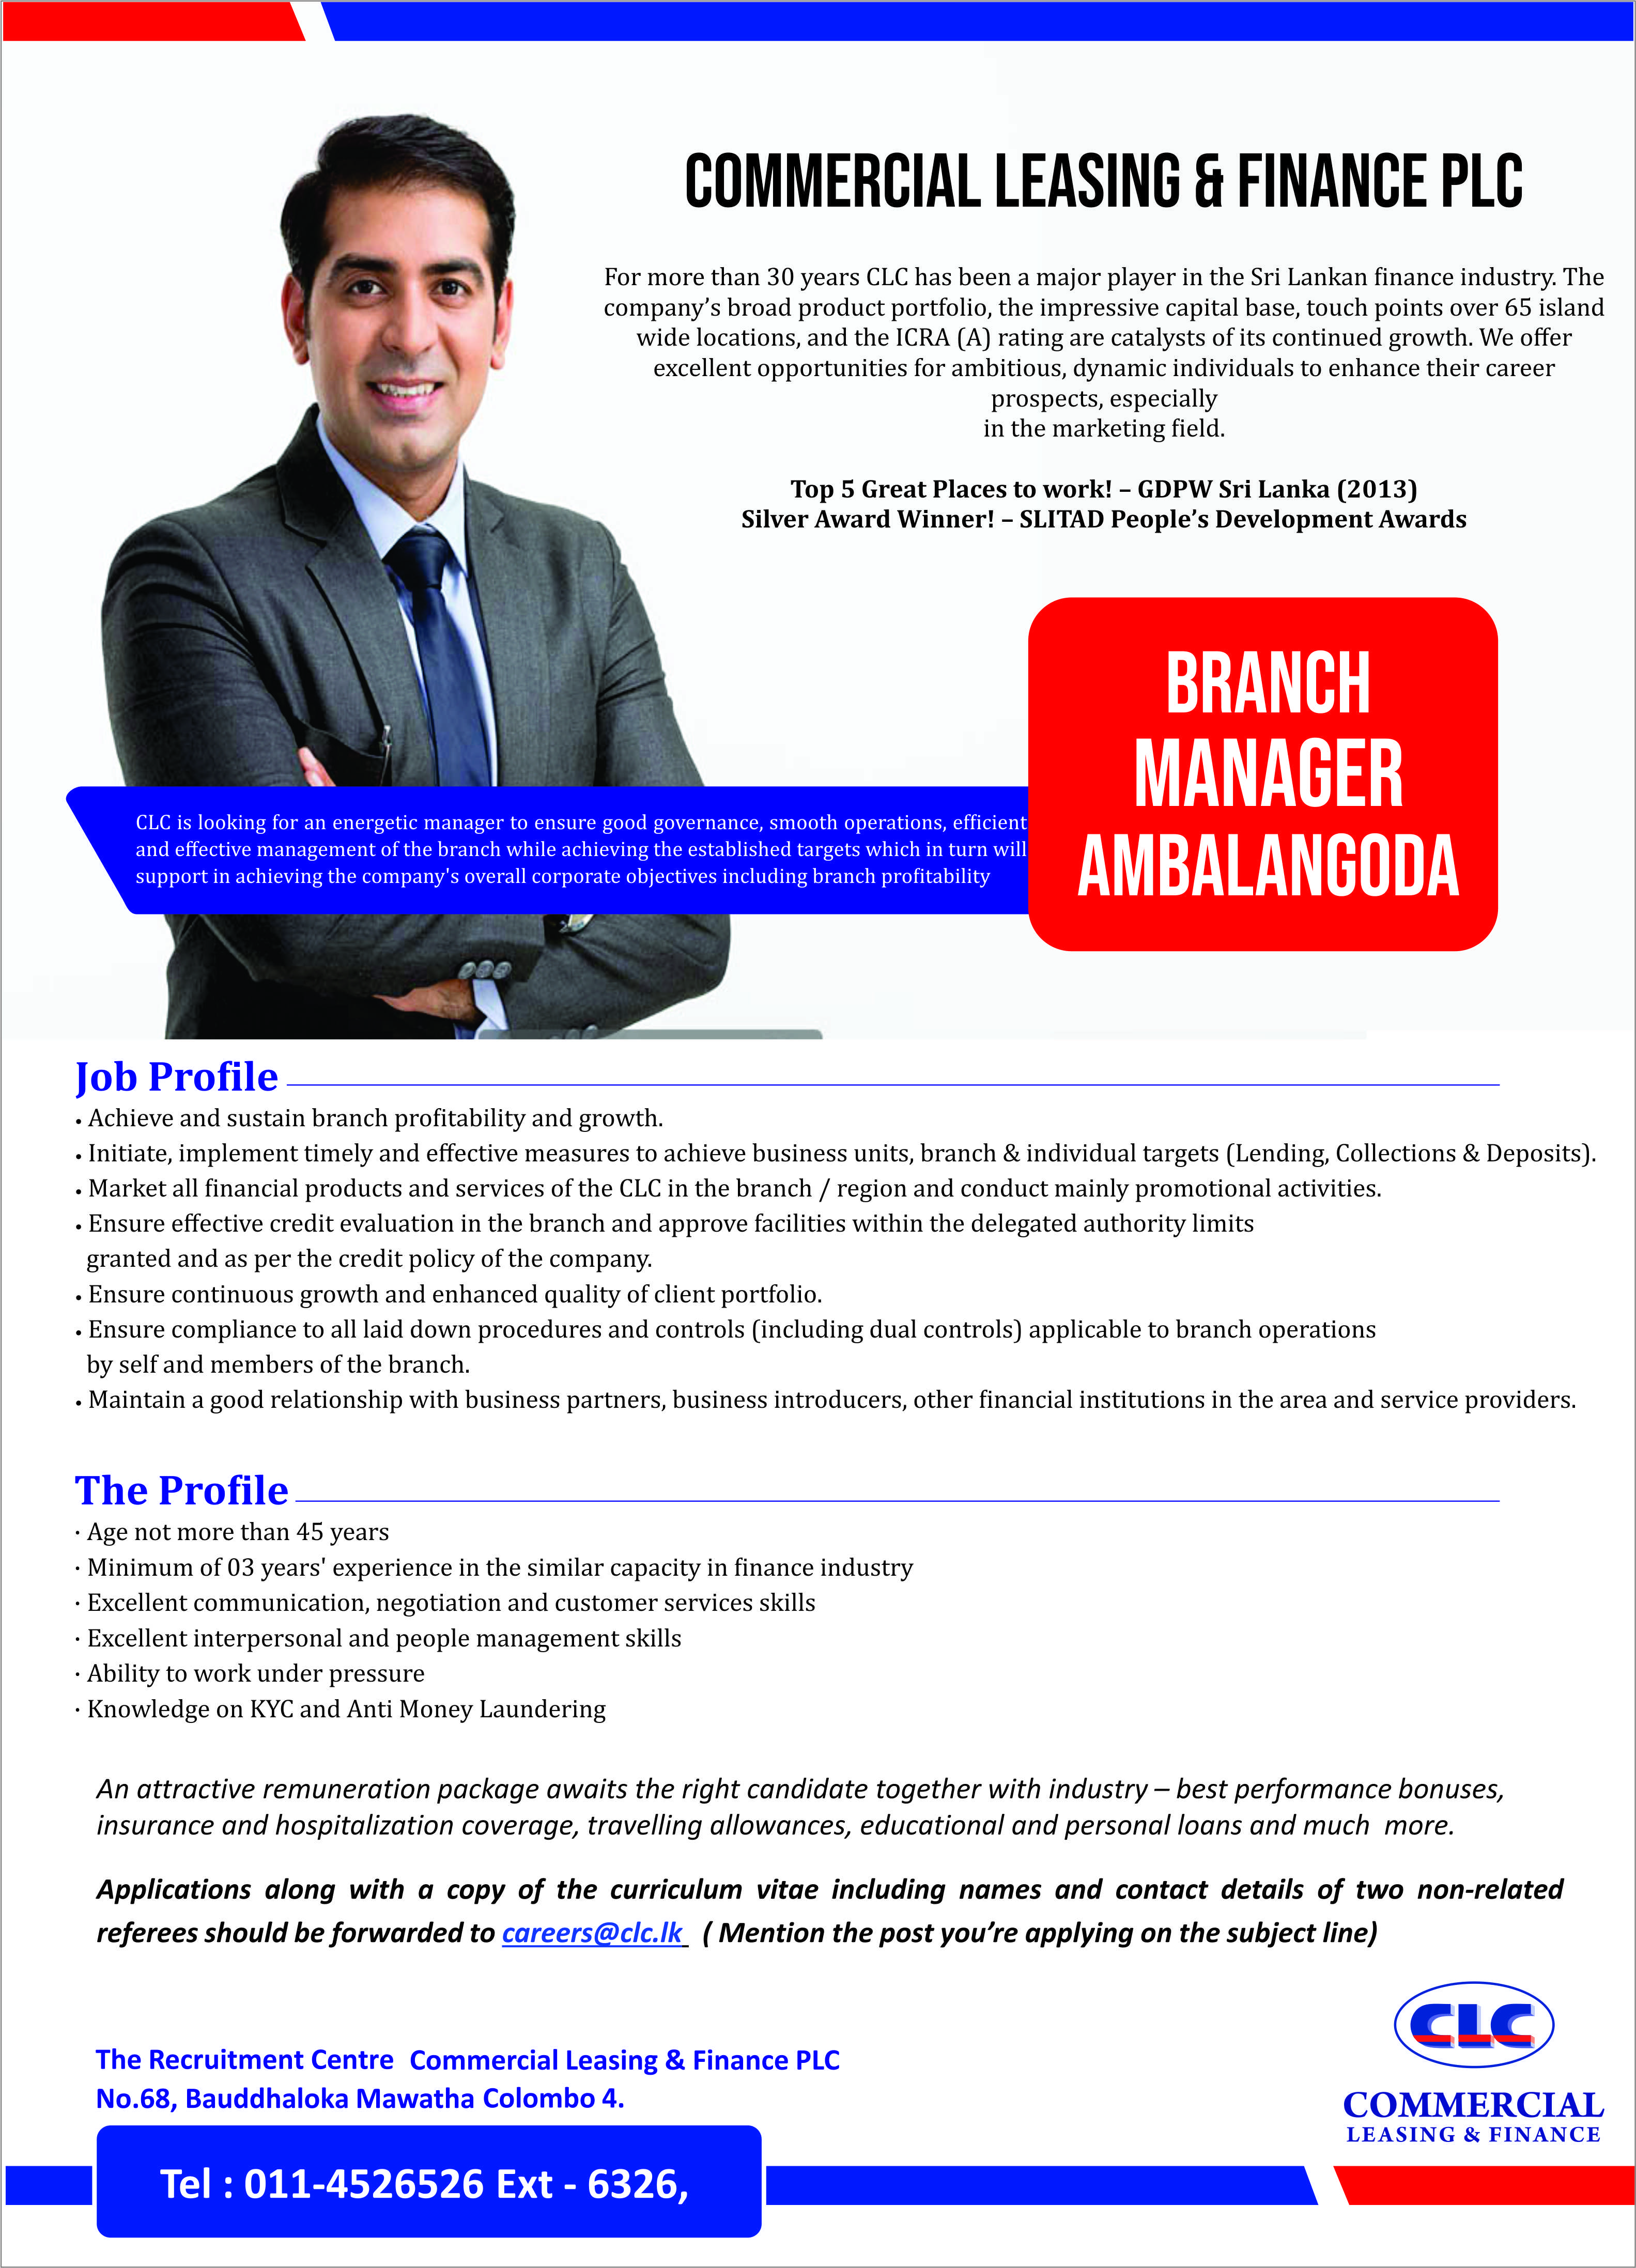 Commercial Leasing & Finance PLC Job Vacancies